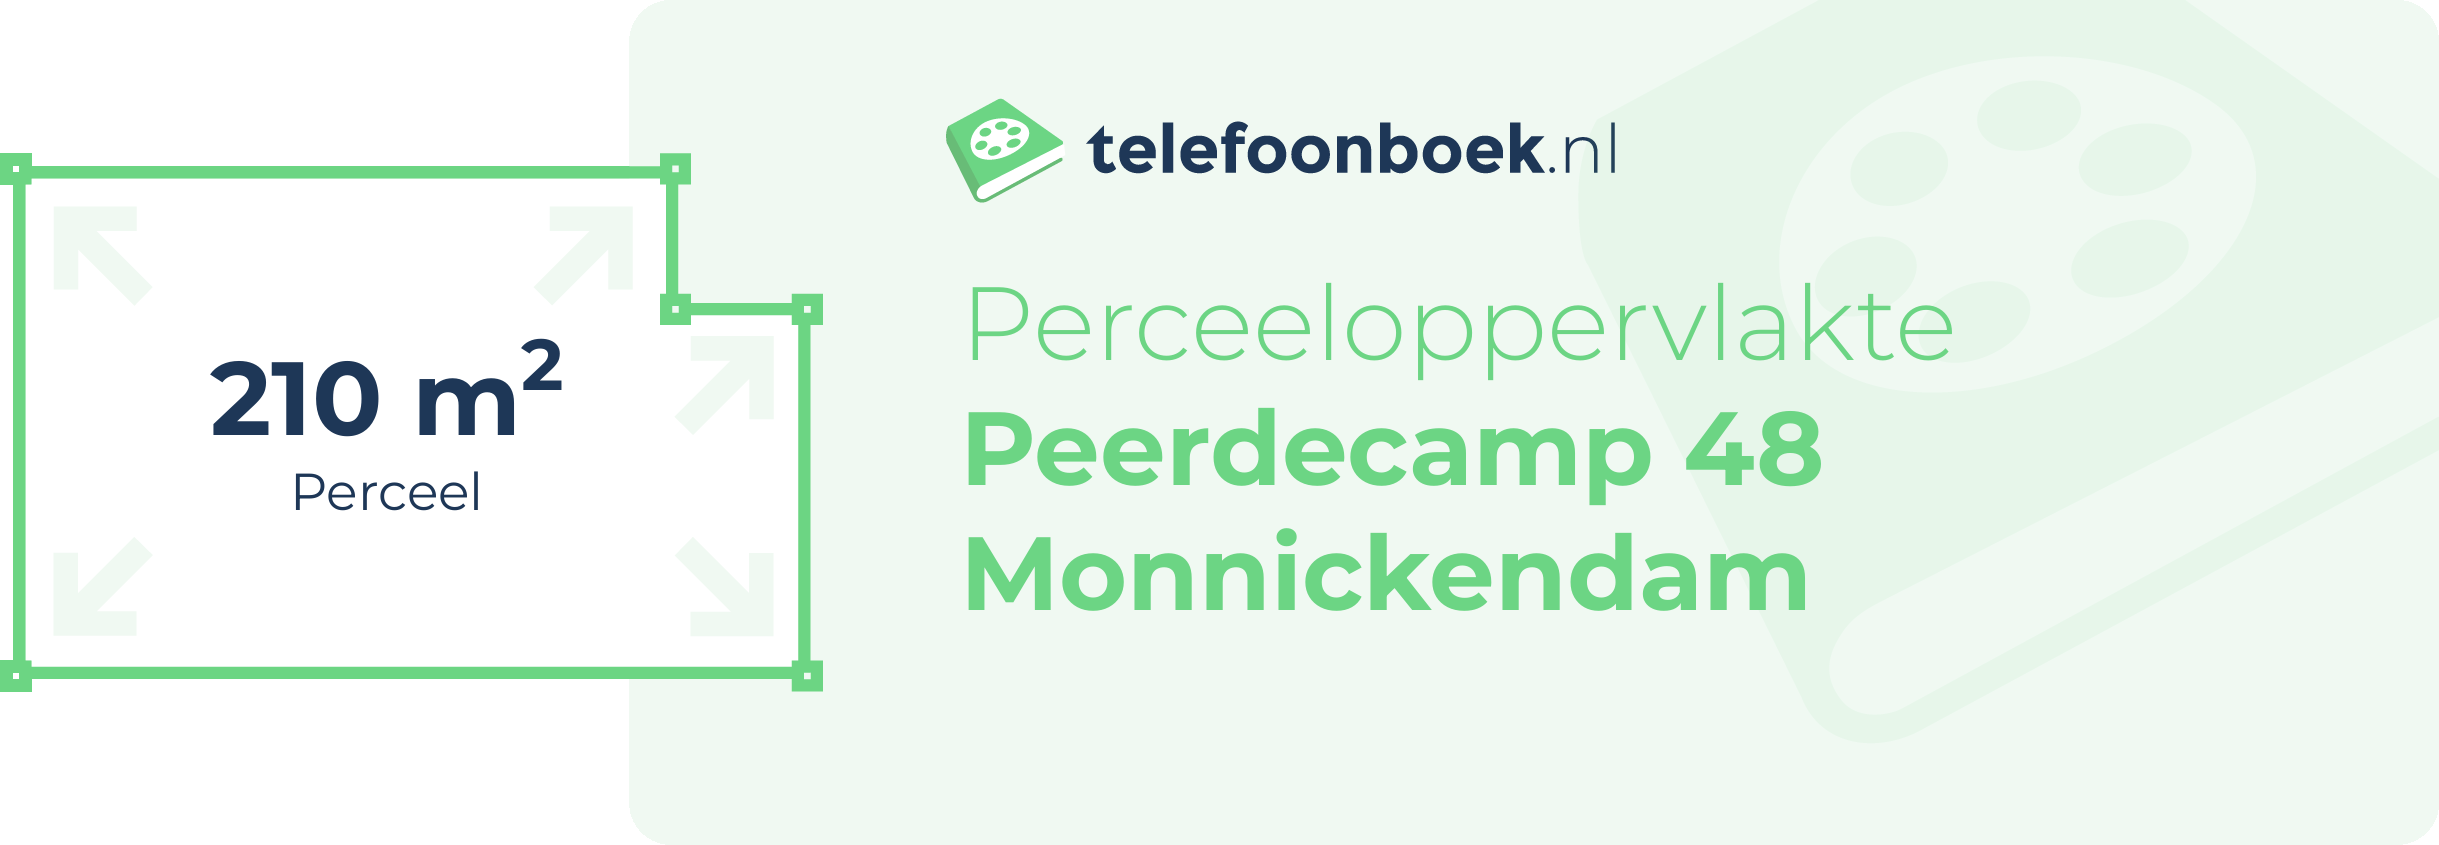 Perceeloppervlakte Peerdecamp 48 Monnickendam